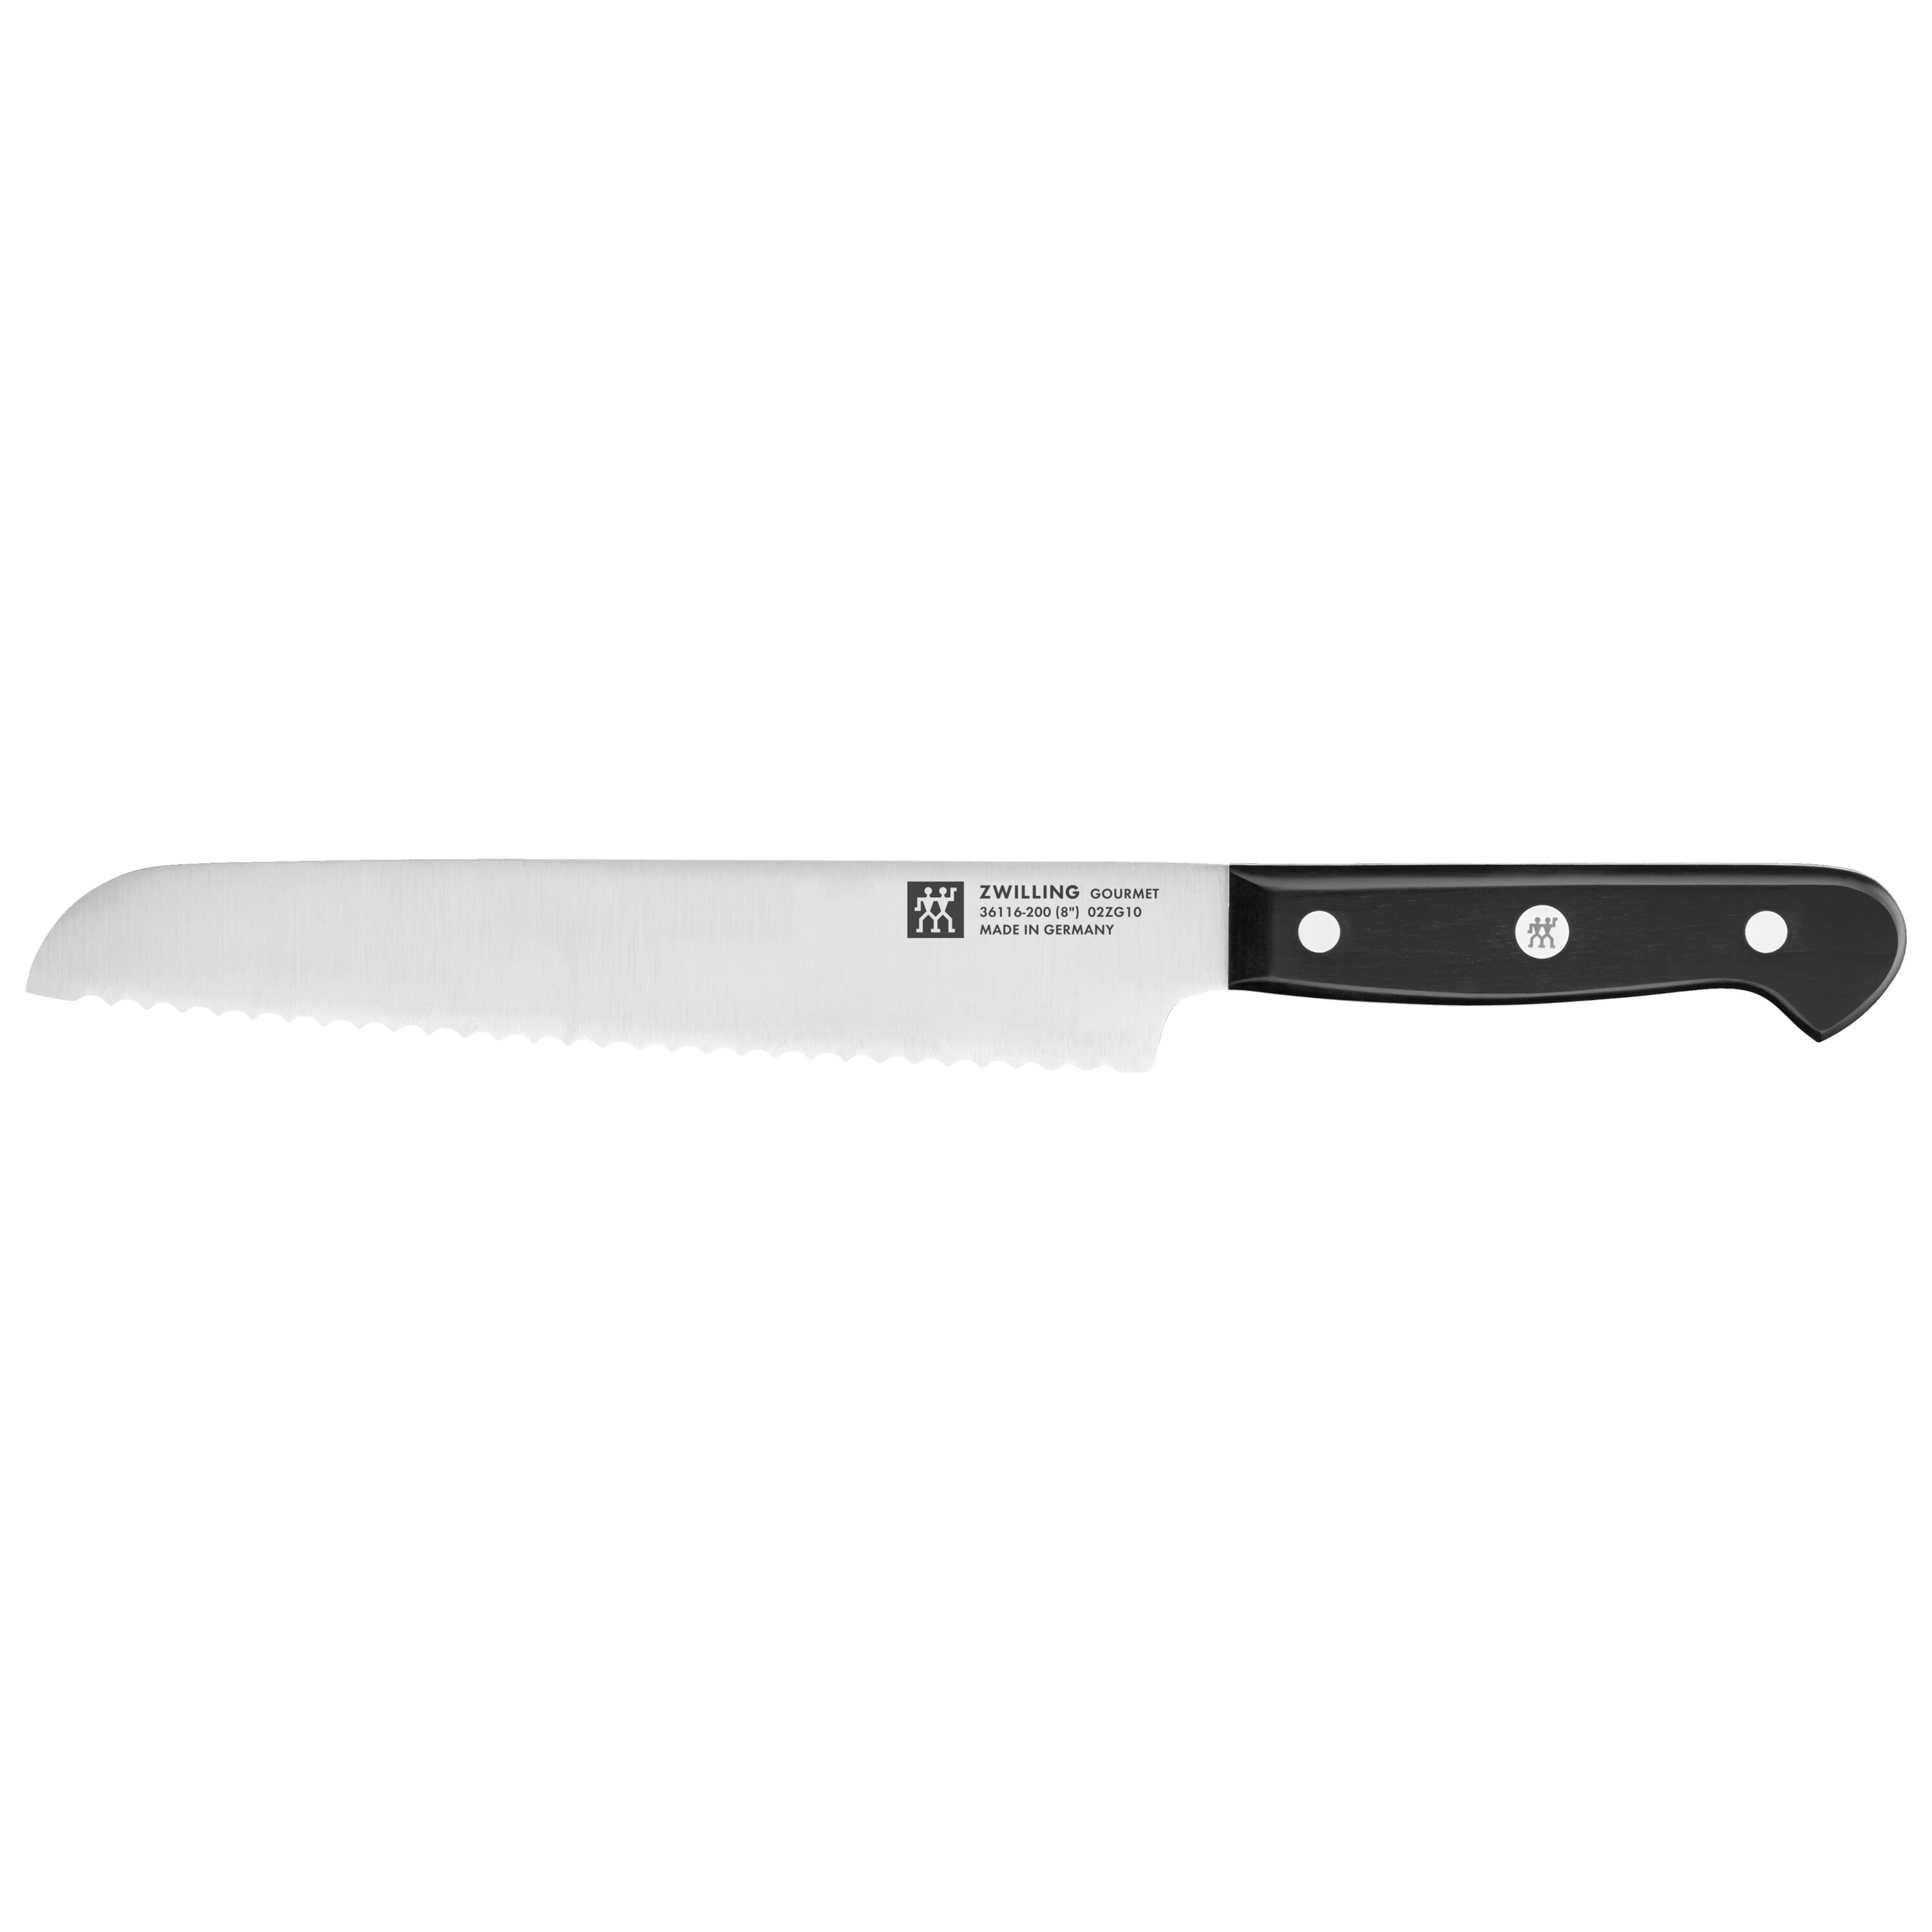 Buy ZWILLING Gourmet set block Knife